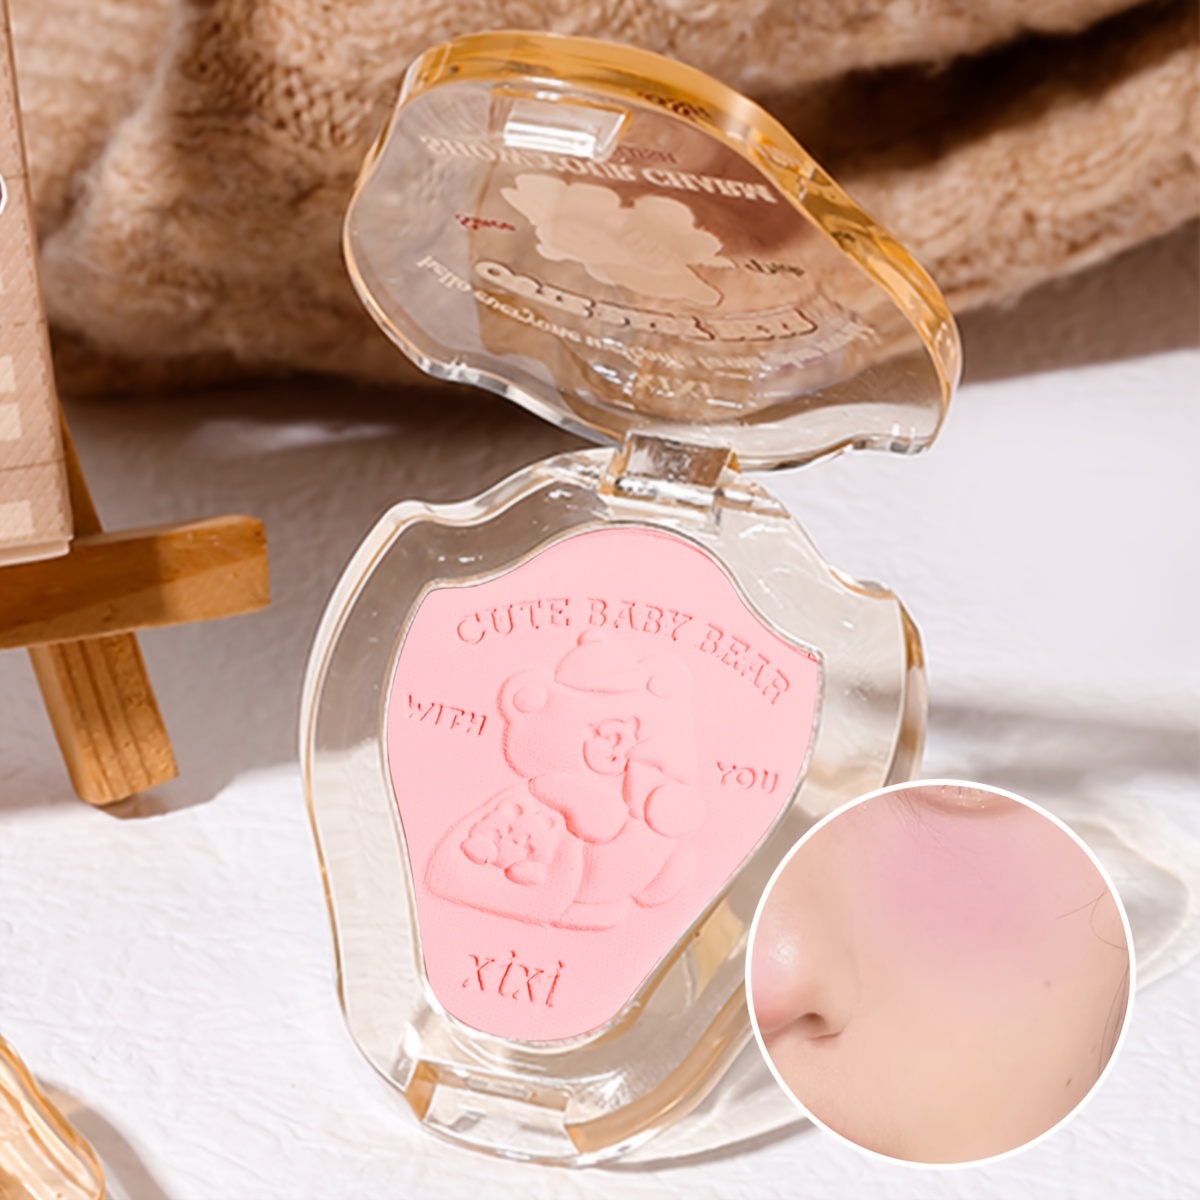 Peach Pink Cute Loose Setting Powder – XIXI Cosmetics